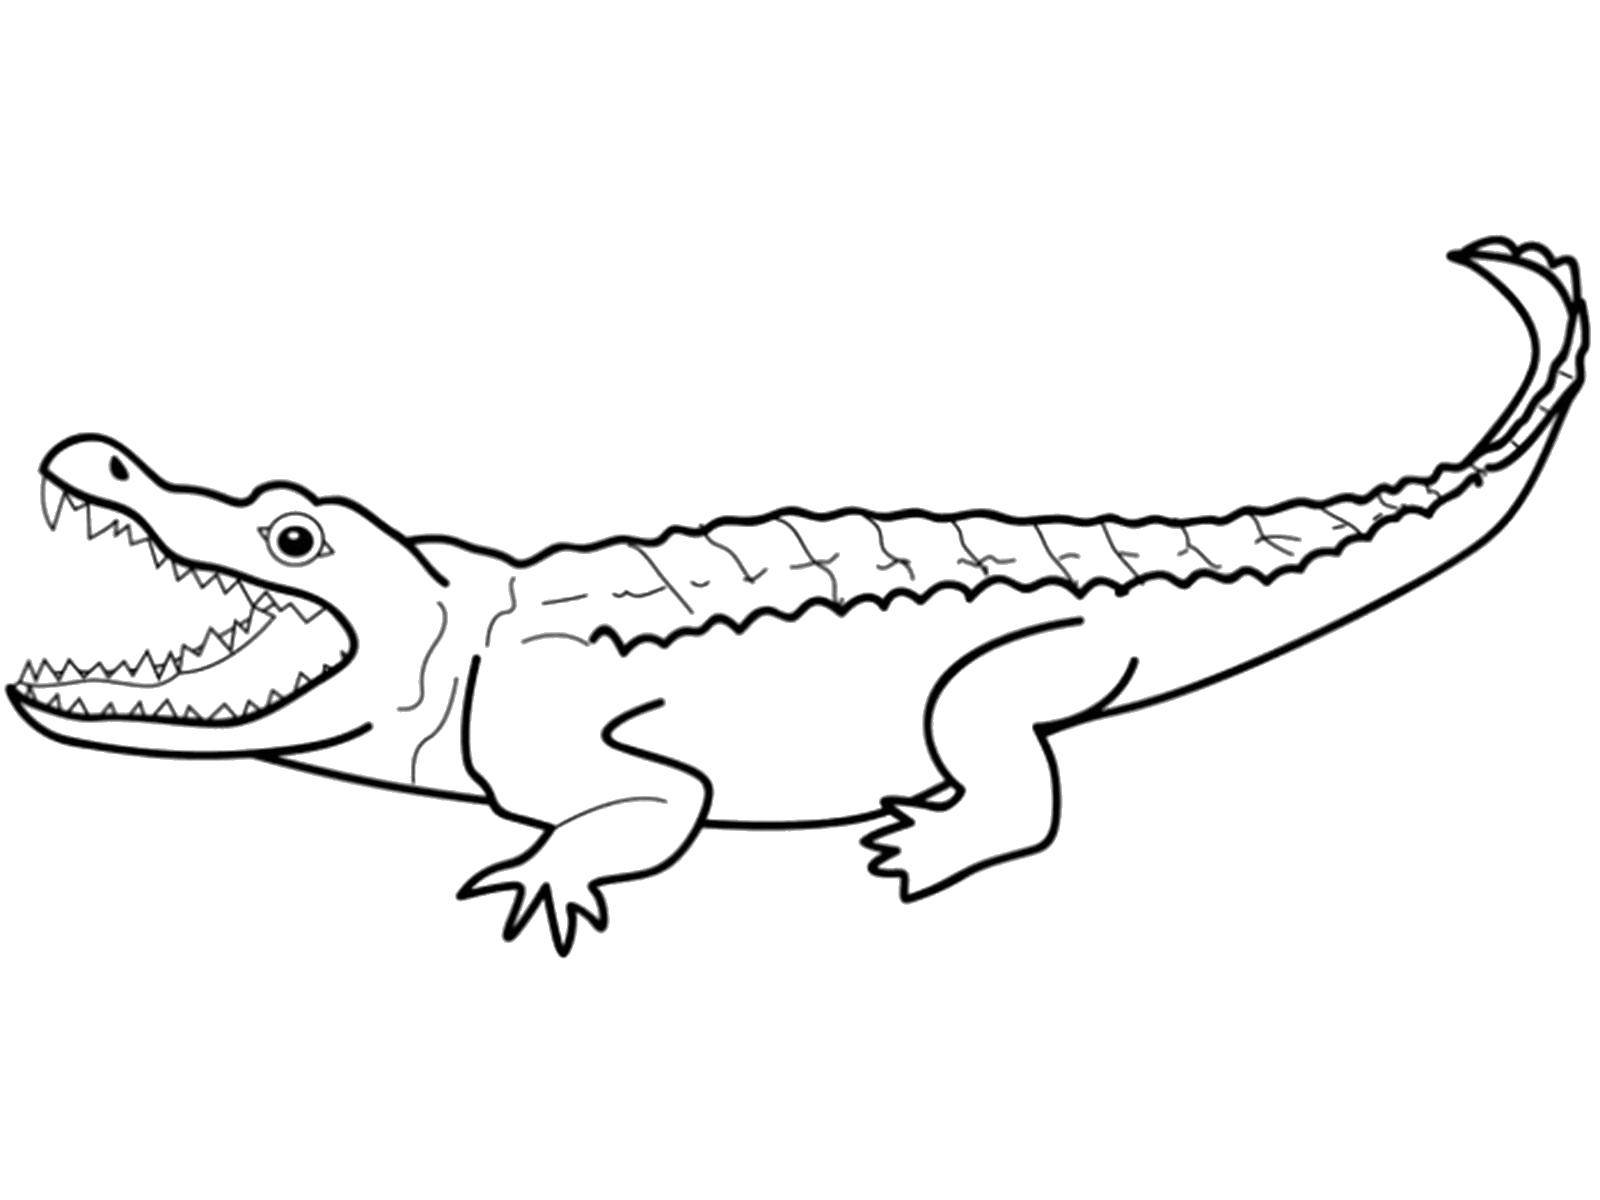 Раскраски из категории Крокодил